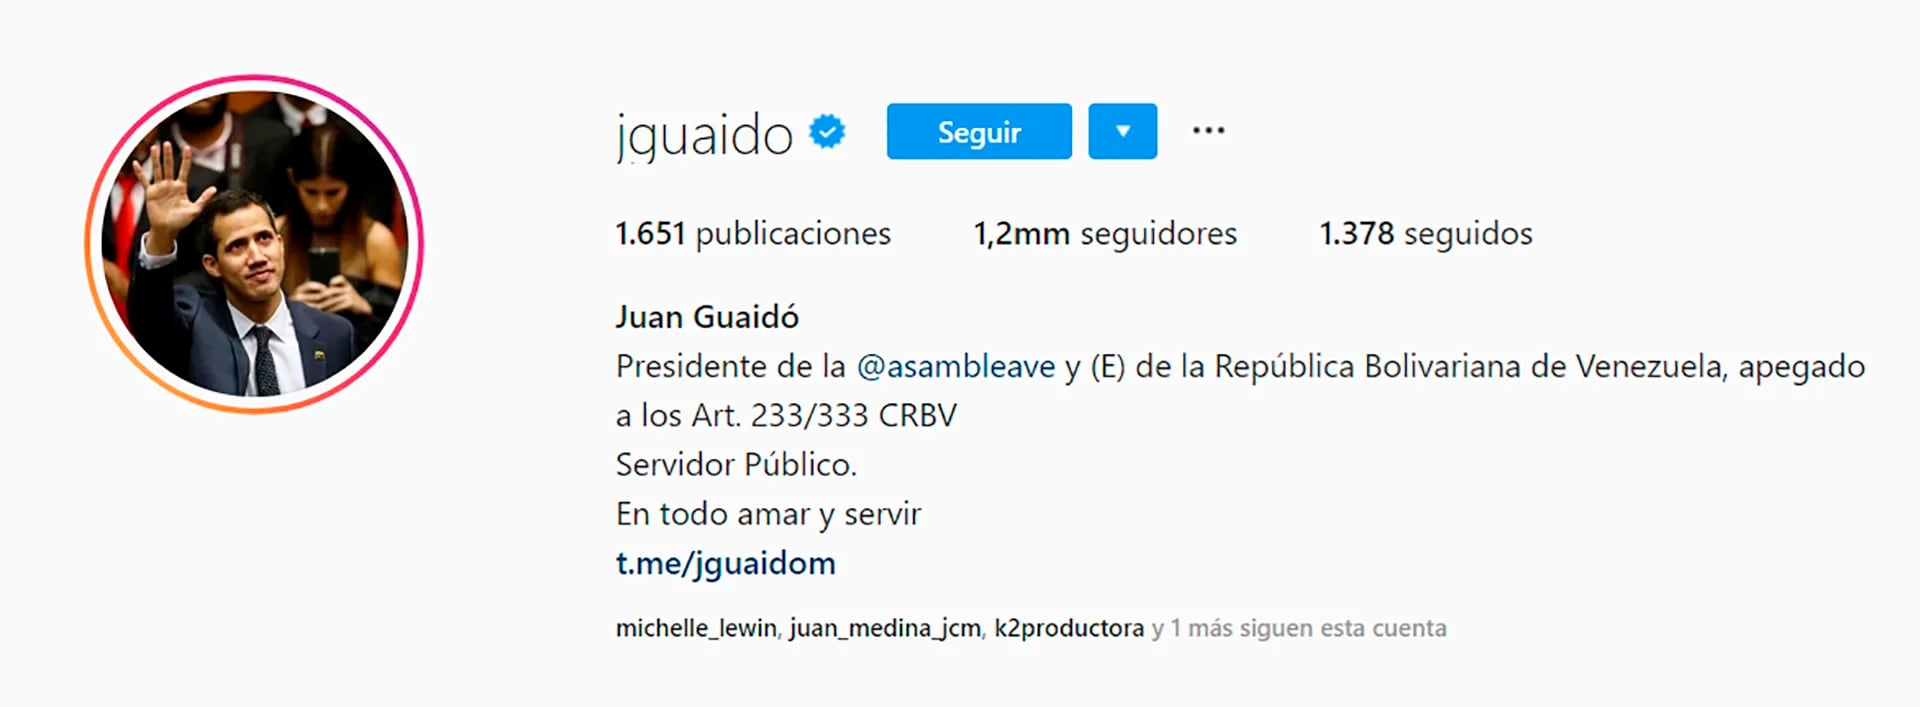 Instagram le otorgó la insignia al presidente interino de Venezuela Juan Guaidó